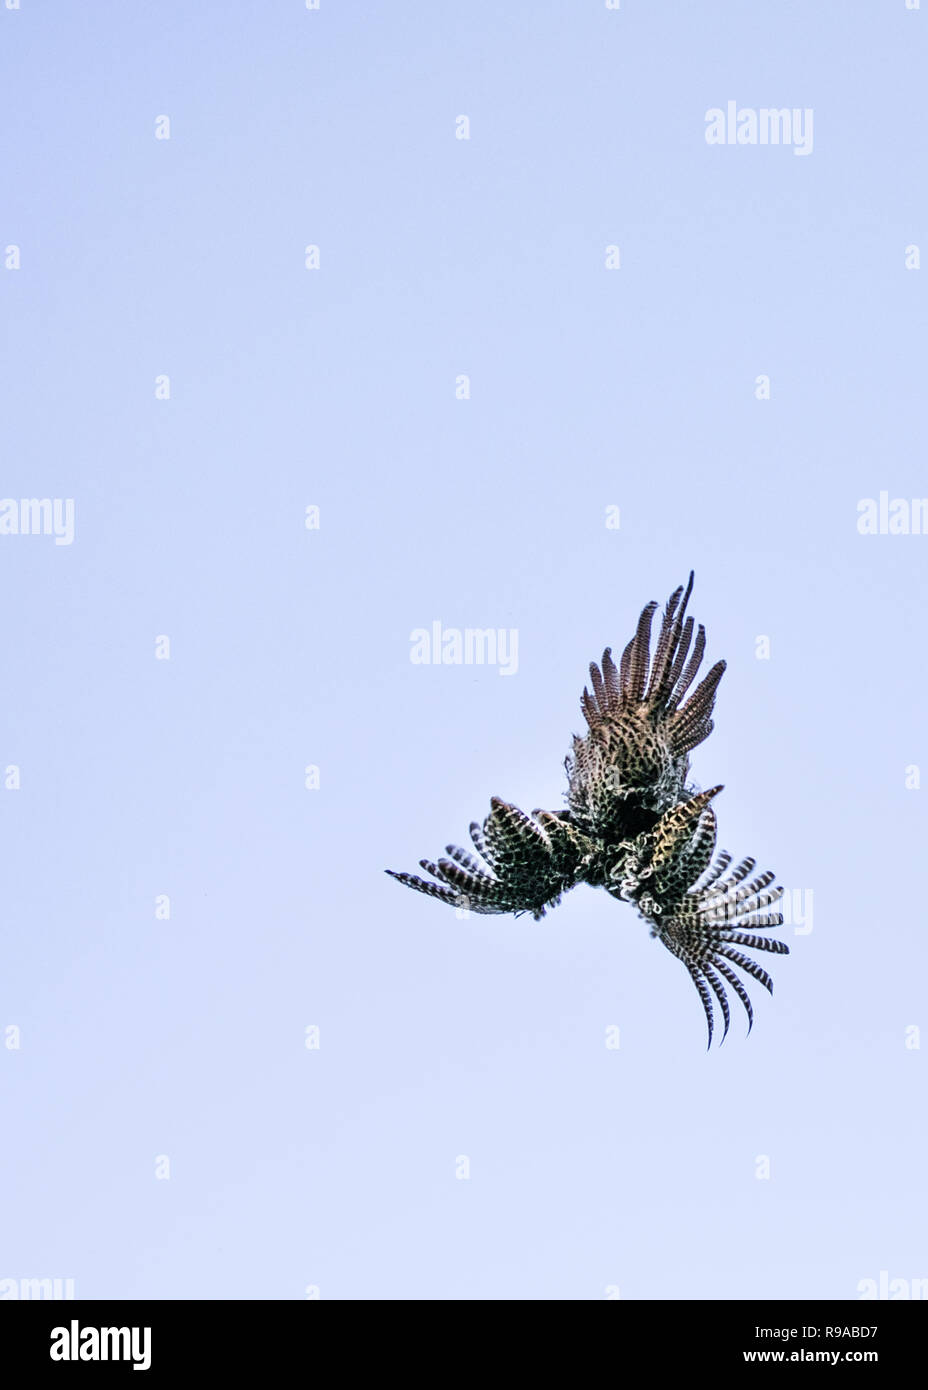 A shot pheasant falling to earth during a pheasant shoot. Stock Photo